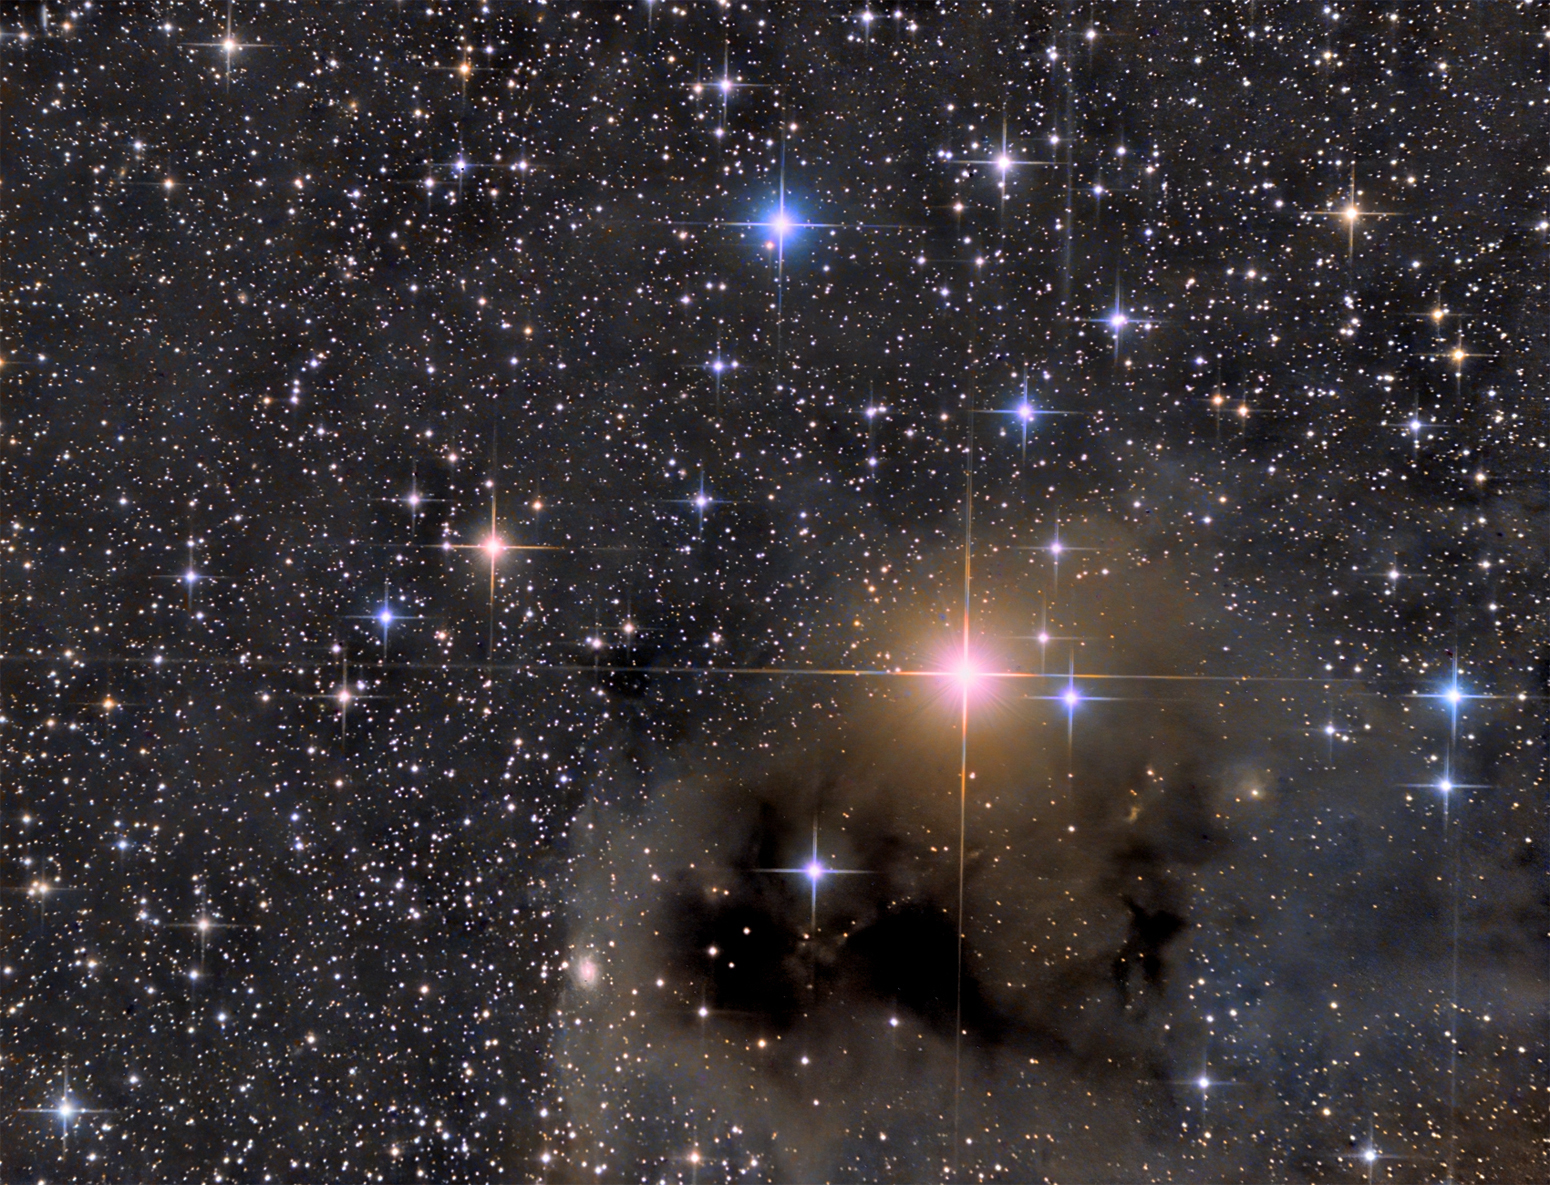 LDN1251 in Constellation Cepheus